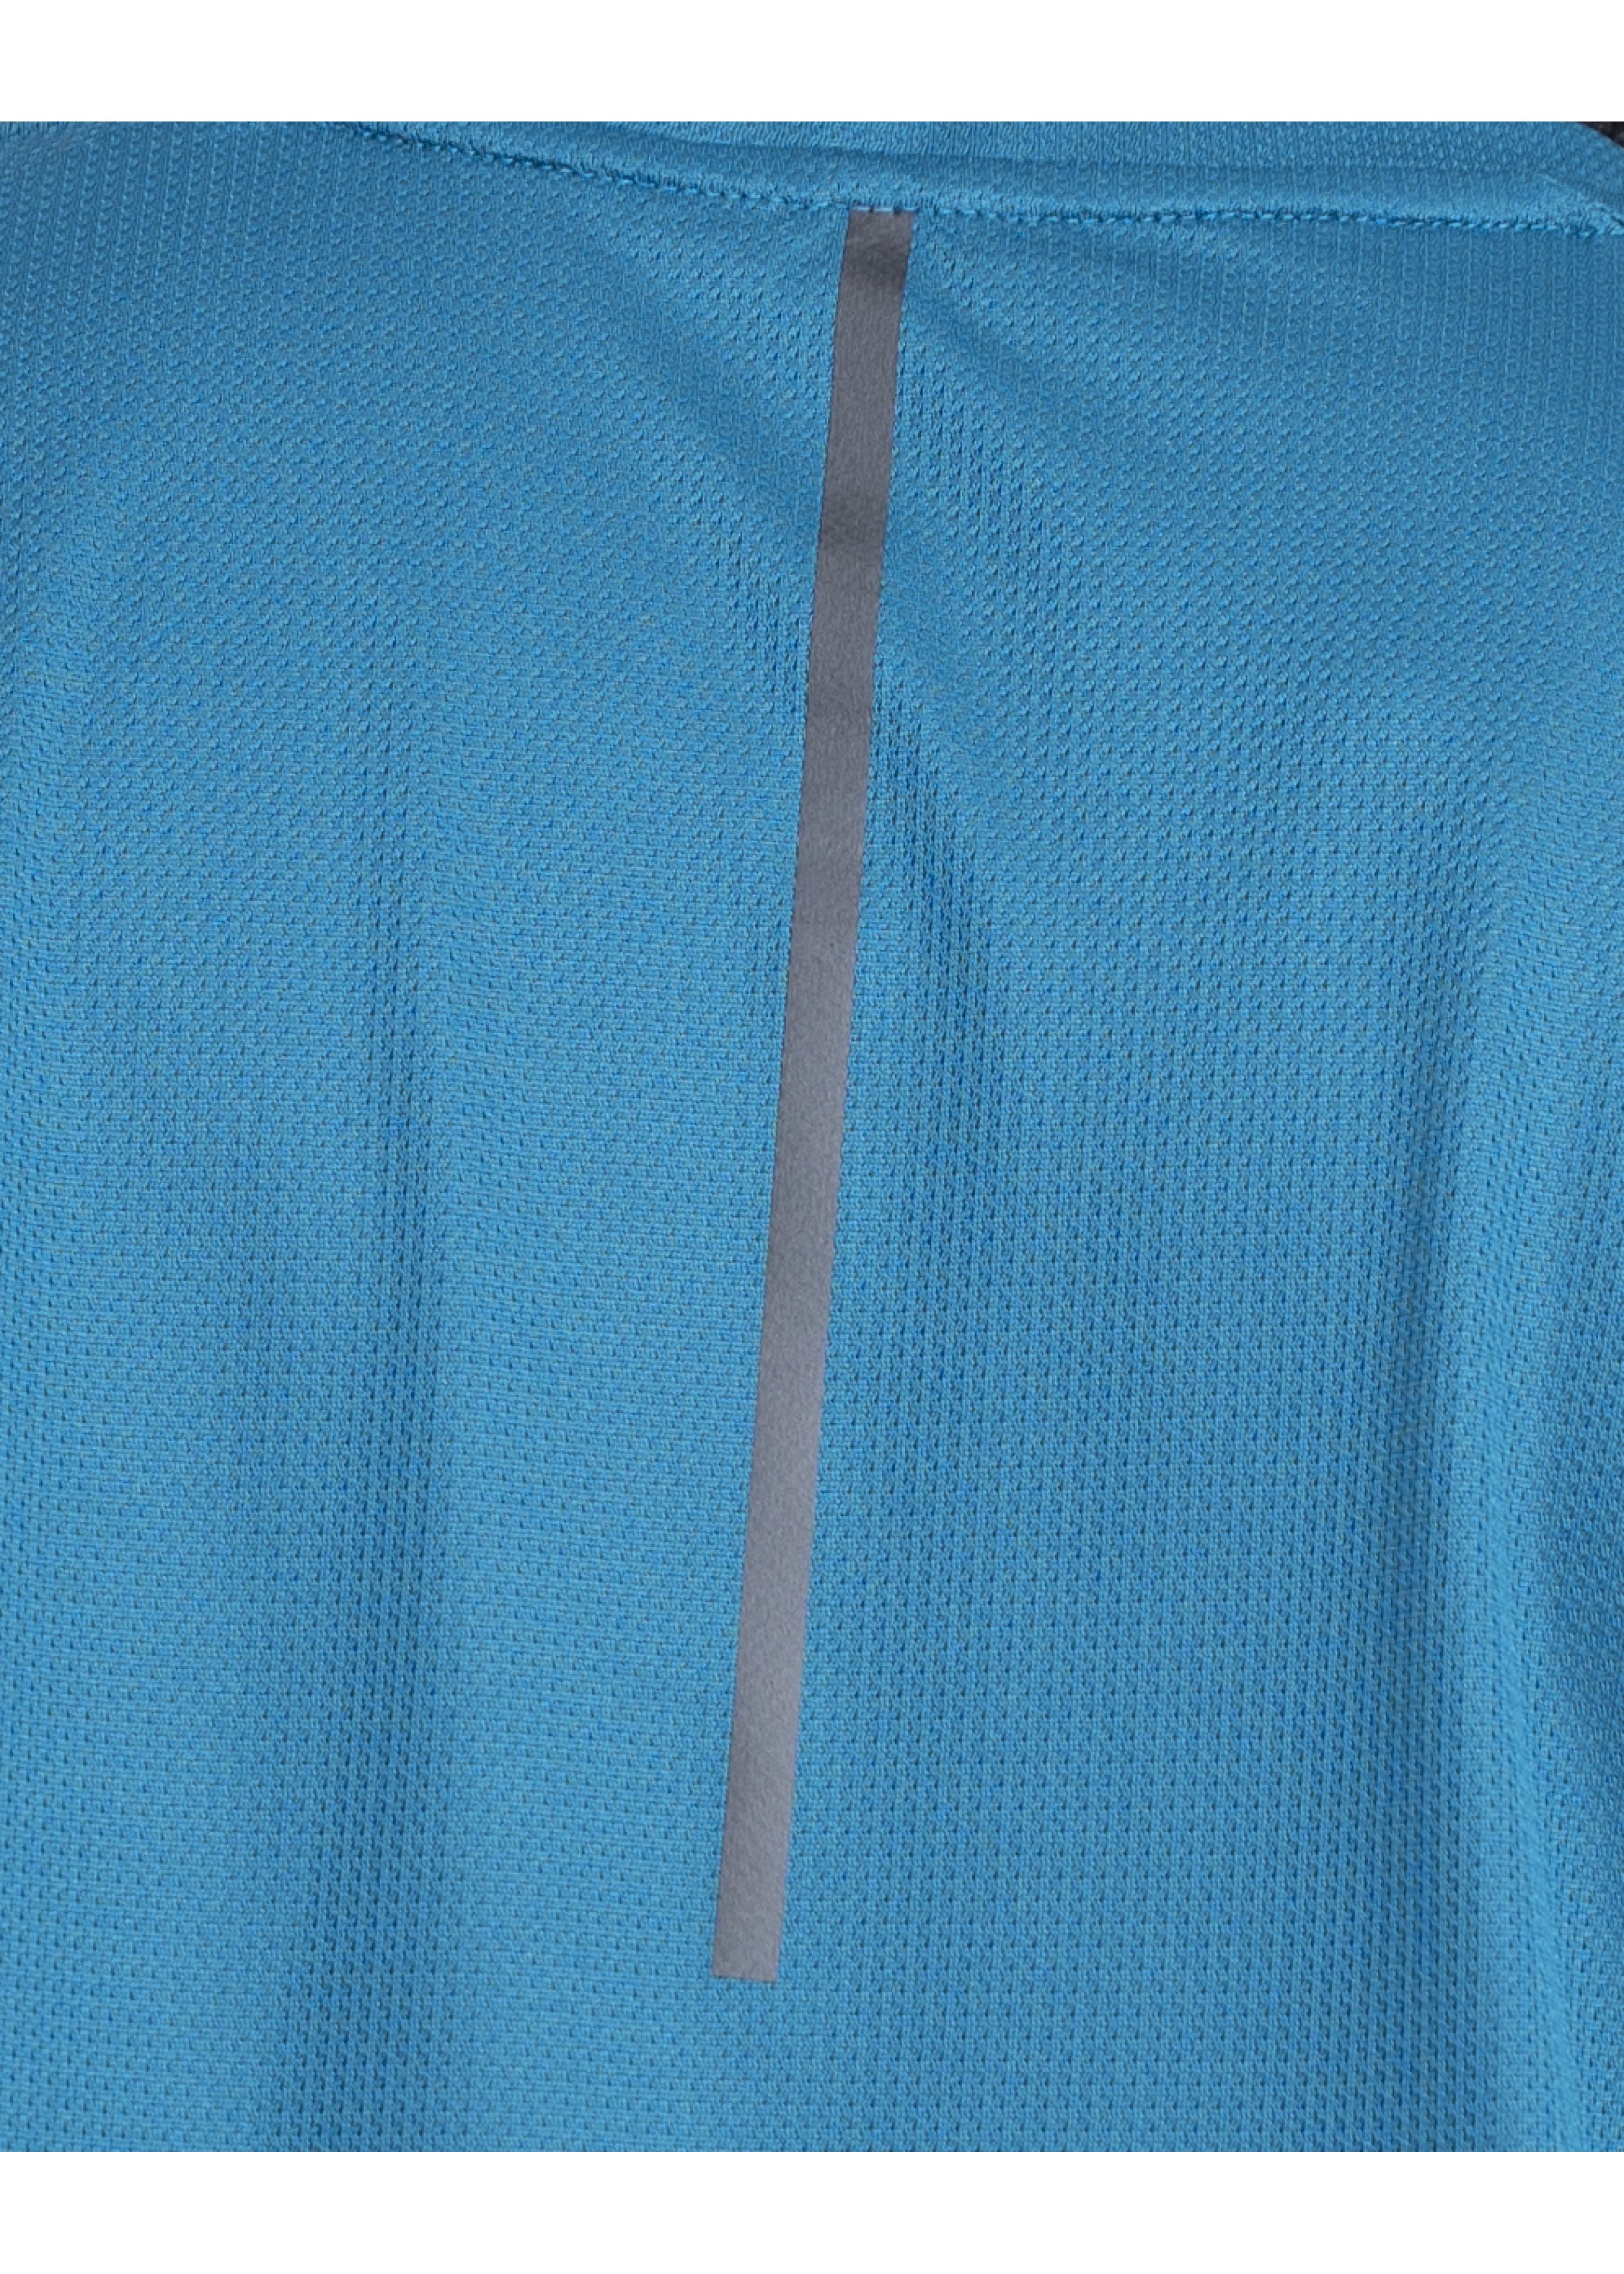 Men's sports t-shirt -Turquoise